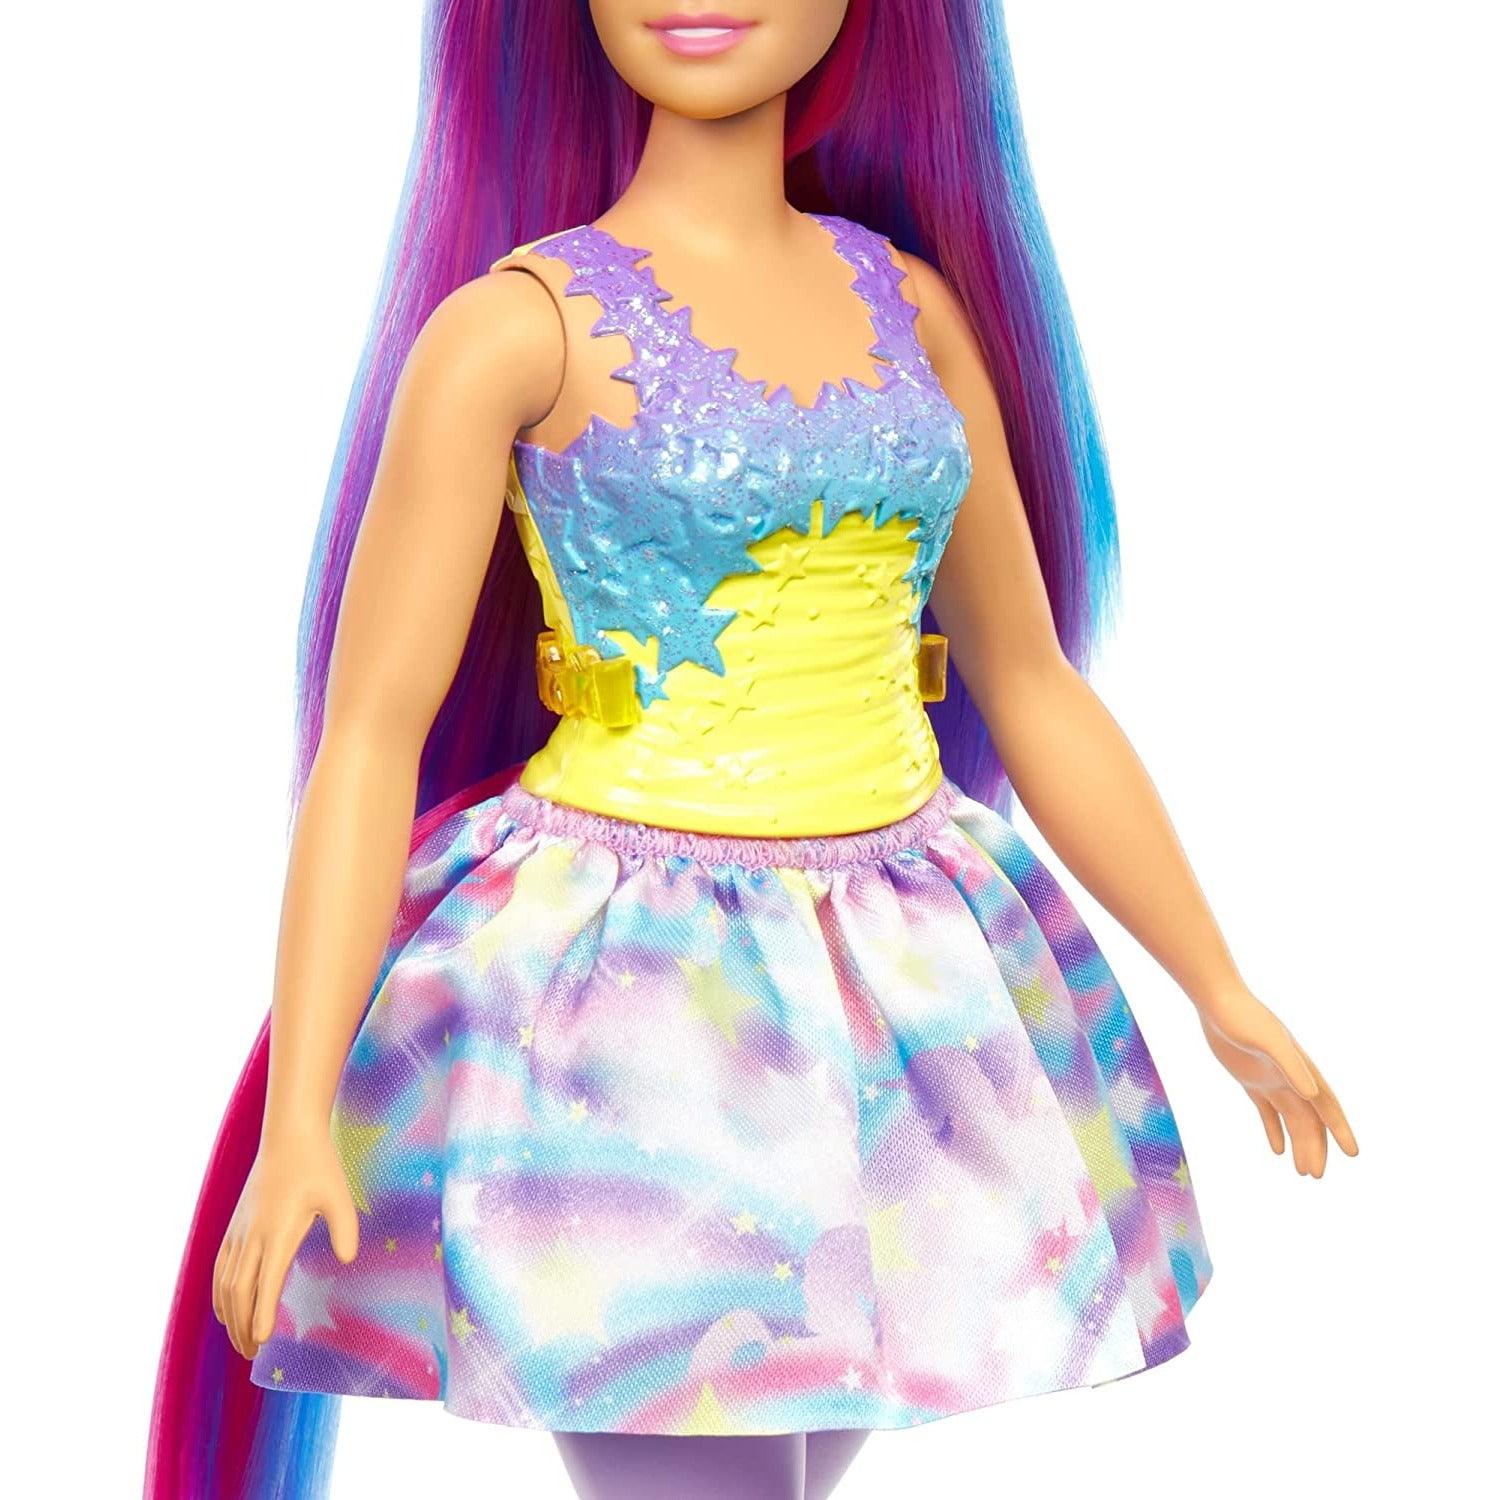 Barbie Dreamtopia Unicorn Doll (Curvy, Blue & Purple Hair), with Skirt, Removable Unicorn Tail & Headband - BumbleToys - 5-7 Years, Barbie, Fashion Dolls & Accessories, Girls, Mermaid, Pre-Order